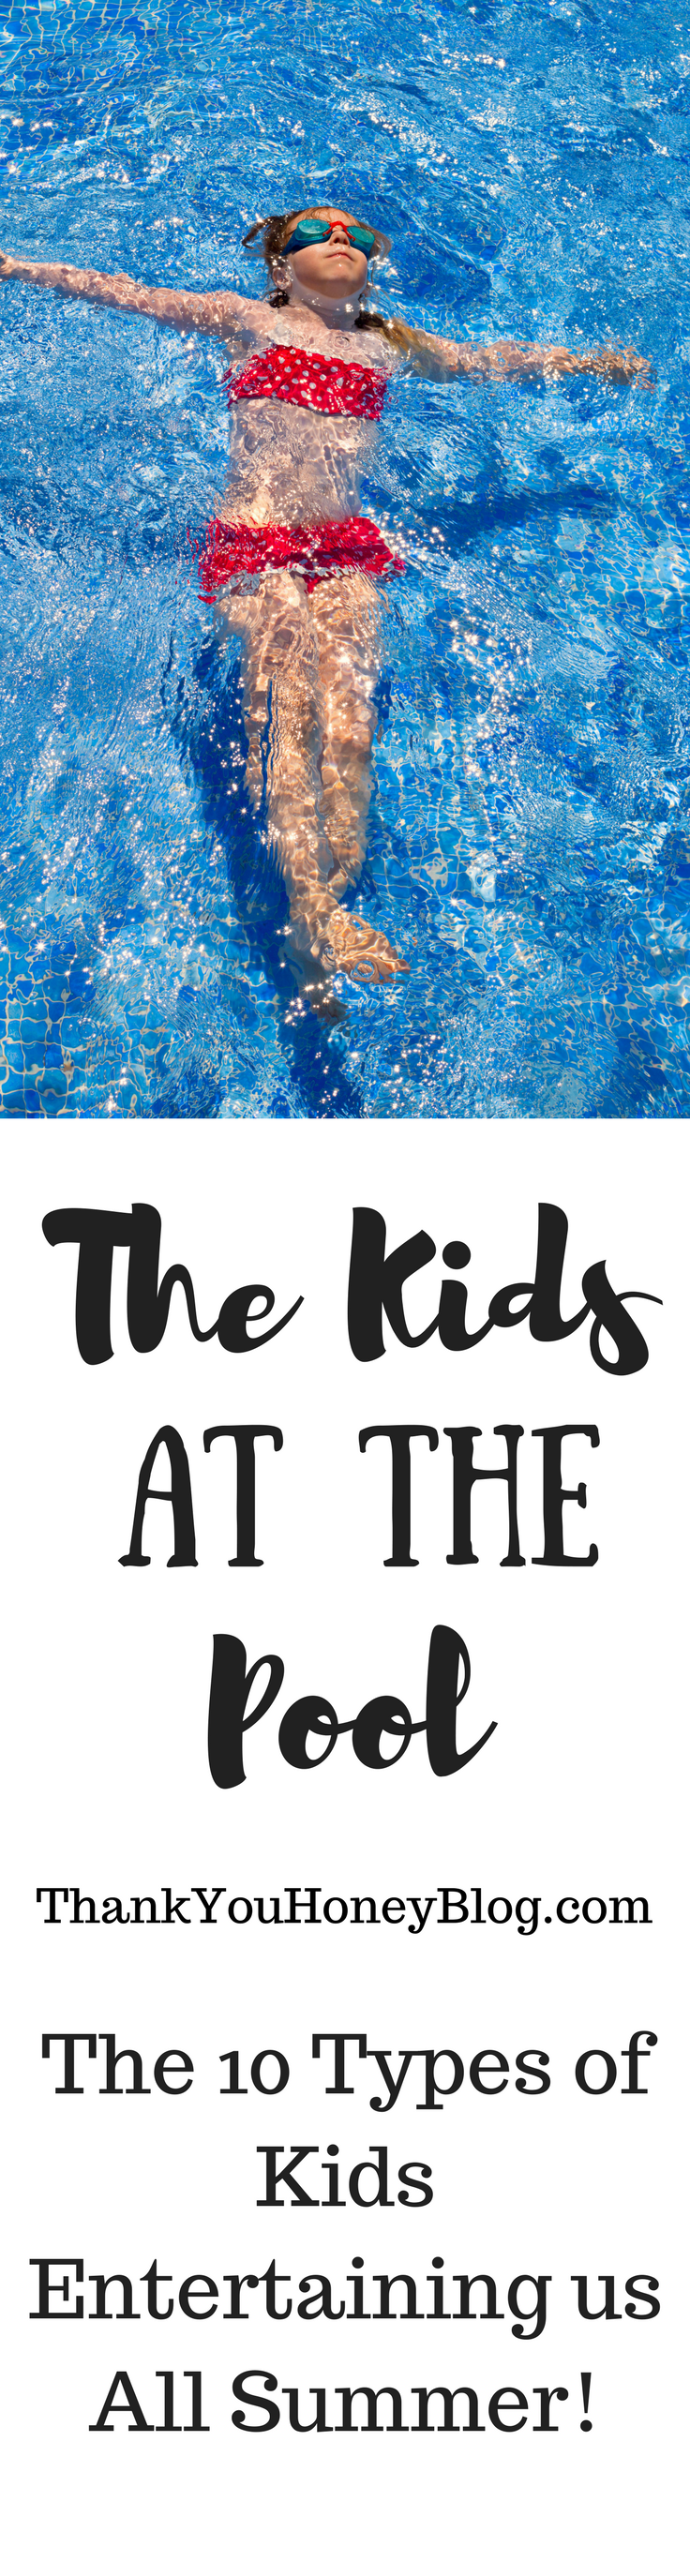 The Kids at the Pool, Funny, Funny Kid Moments, Humor, Kids, laugh, Pool, Pool Club, Swimming Pool, Summer, Summer Break, Vacation, Memories